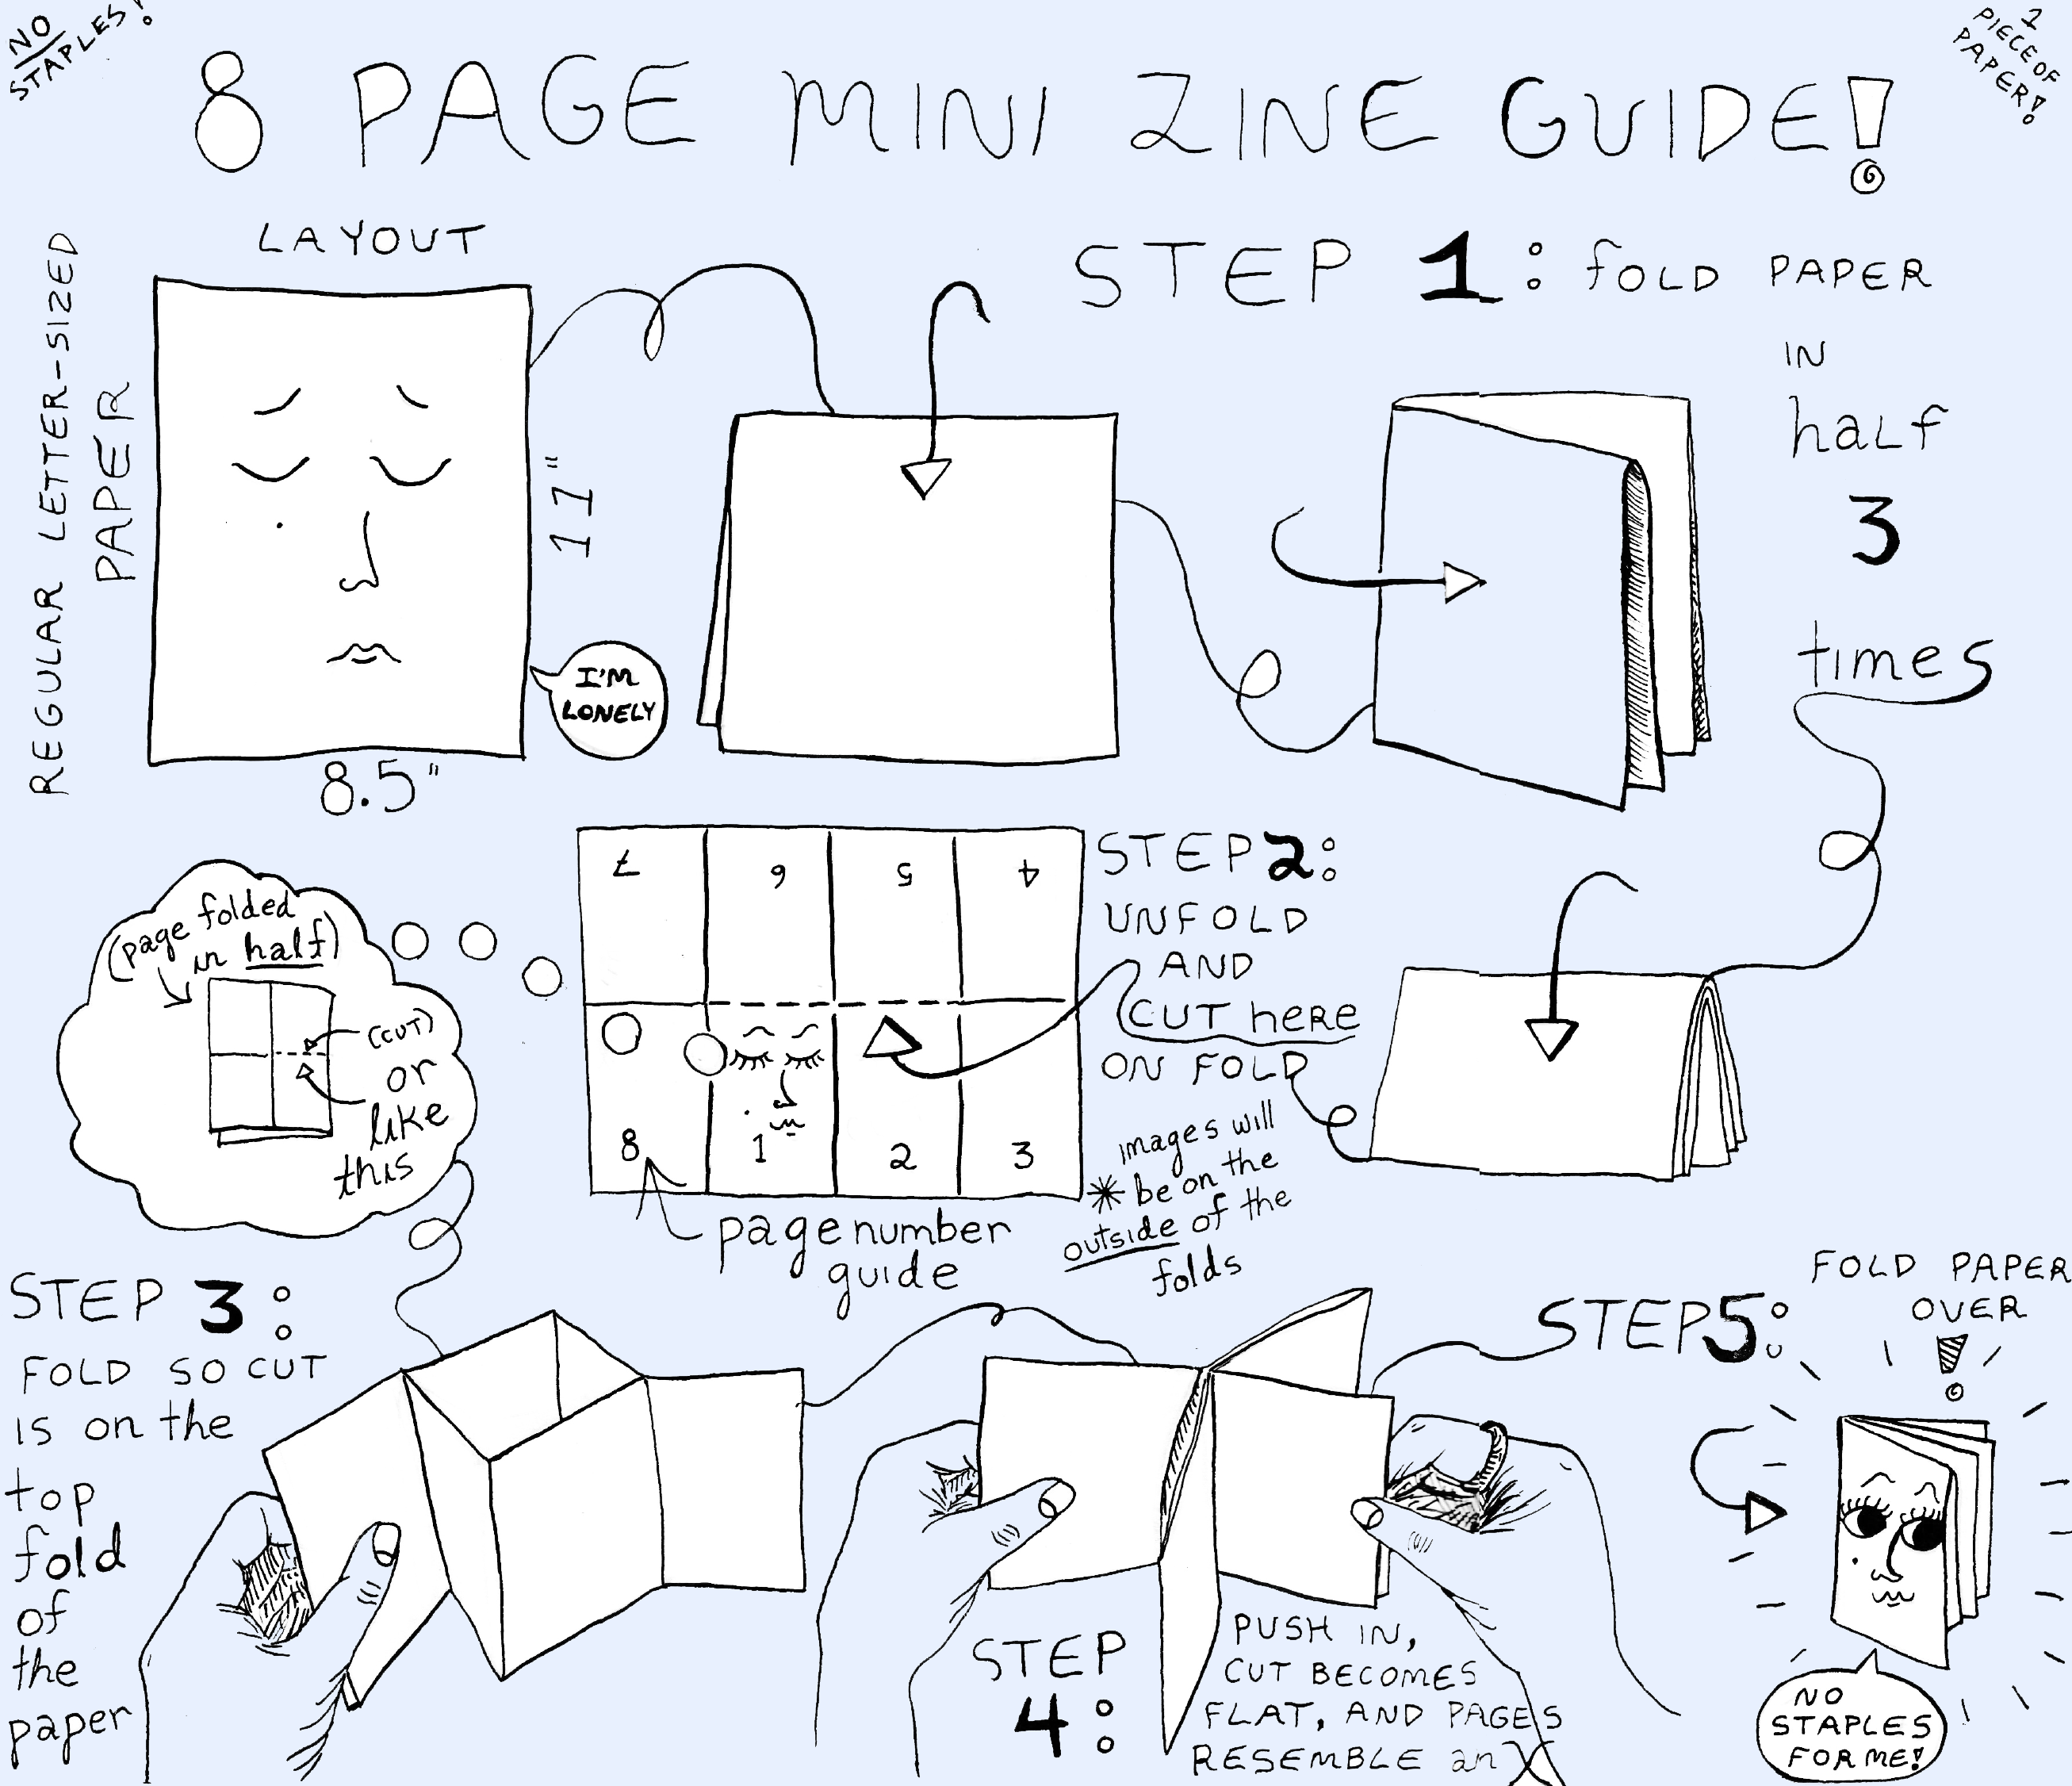 8 page mini zine guidefinalcolour copy